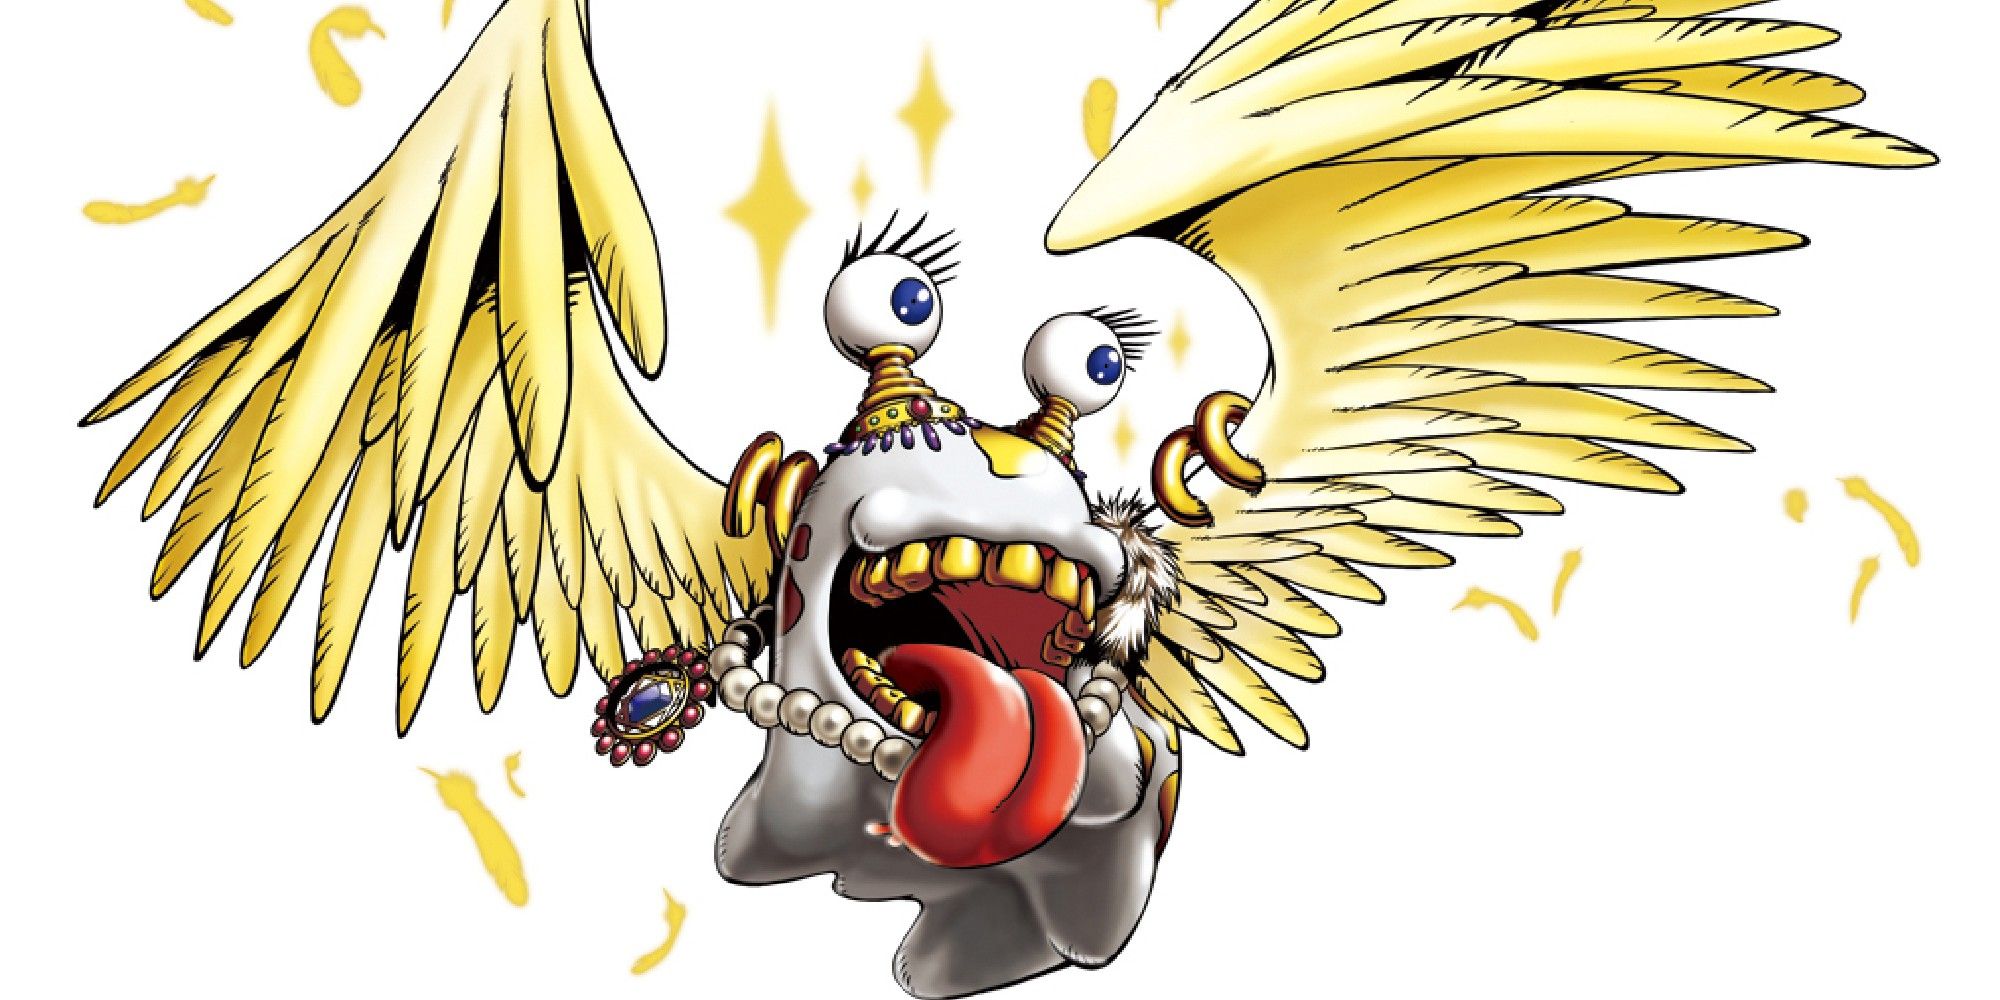 Digimon Wiki: PlatinumNumemon Flying